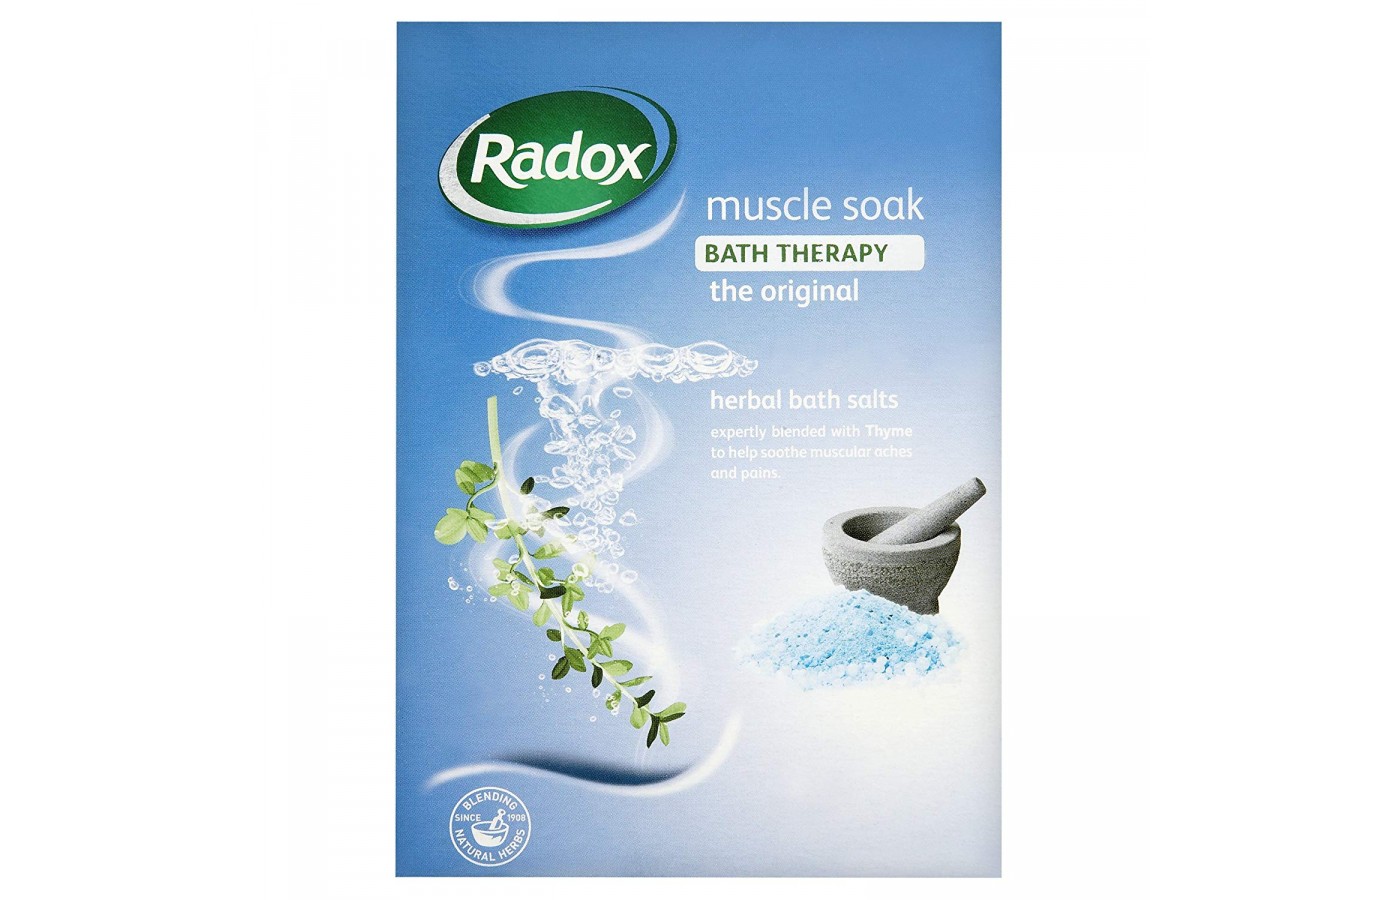 radox muscle soak